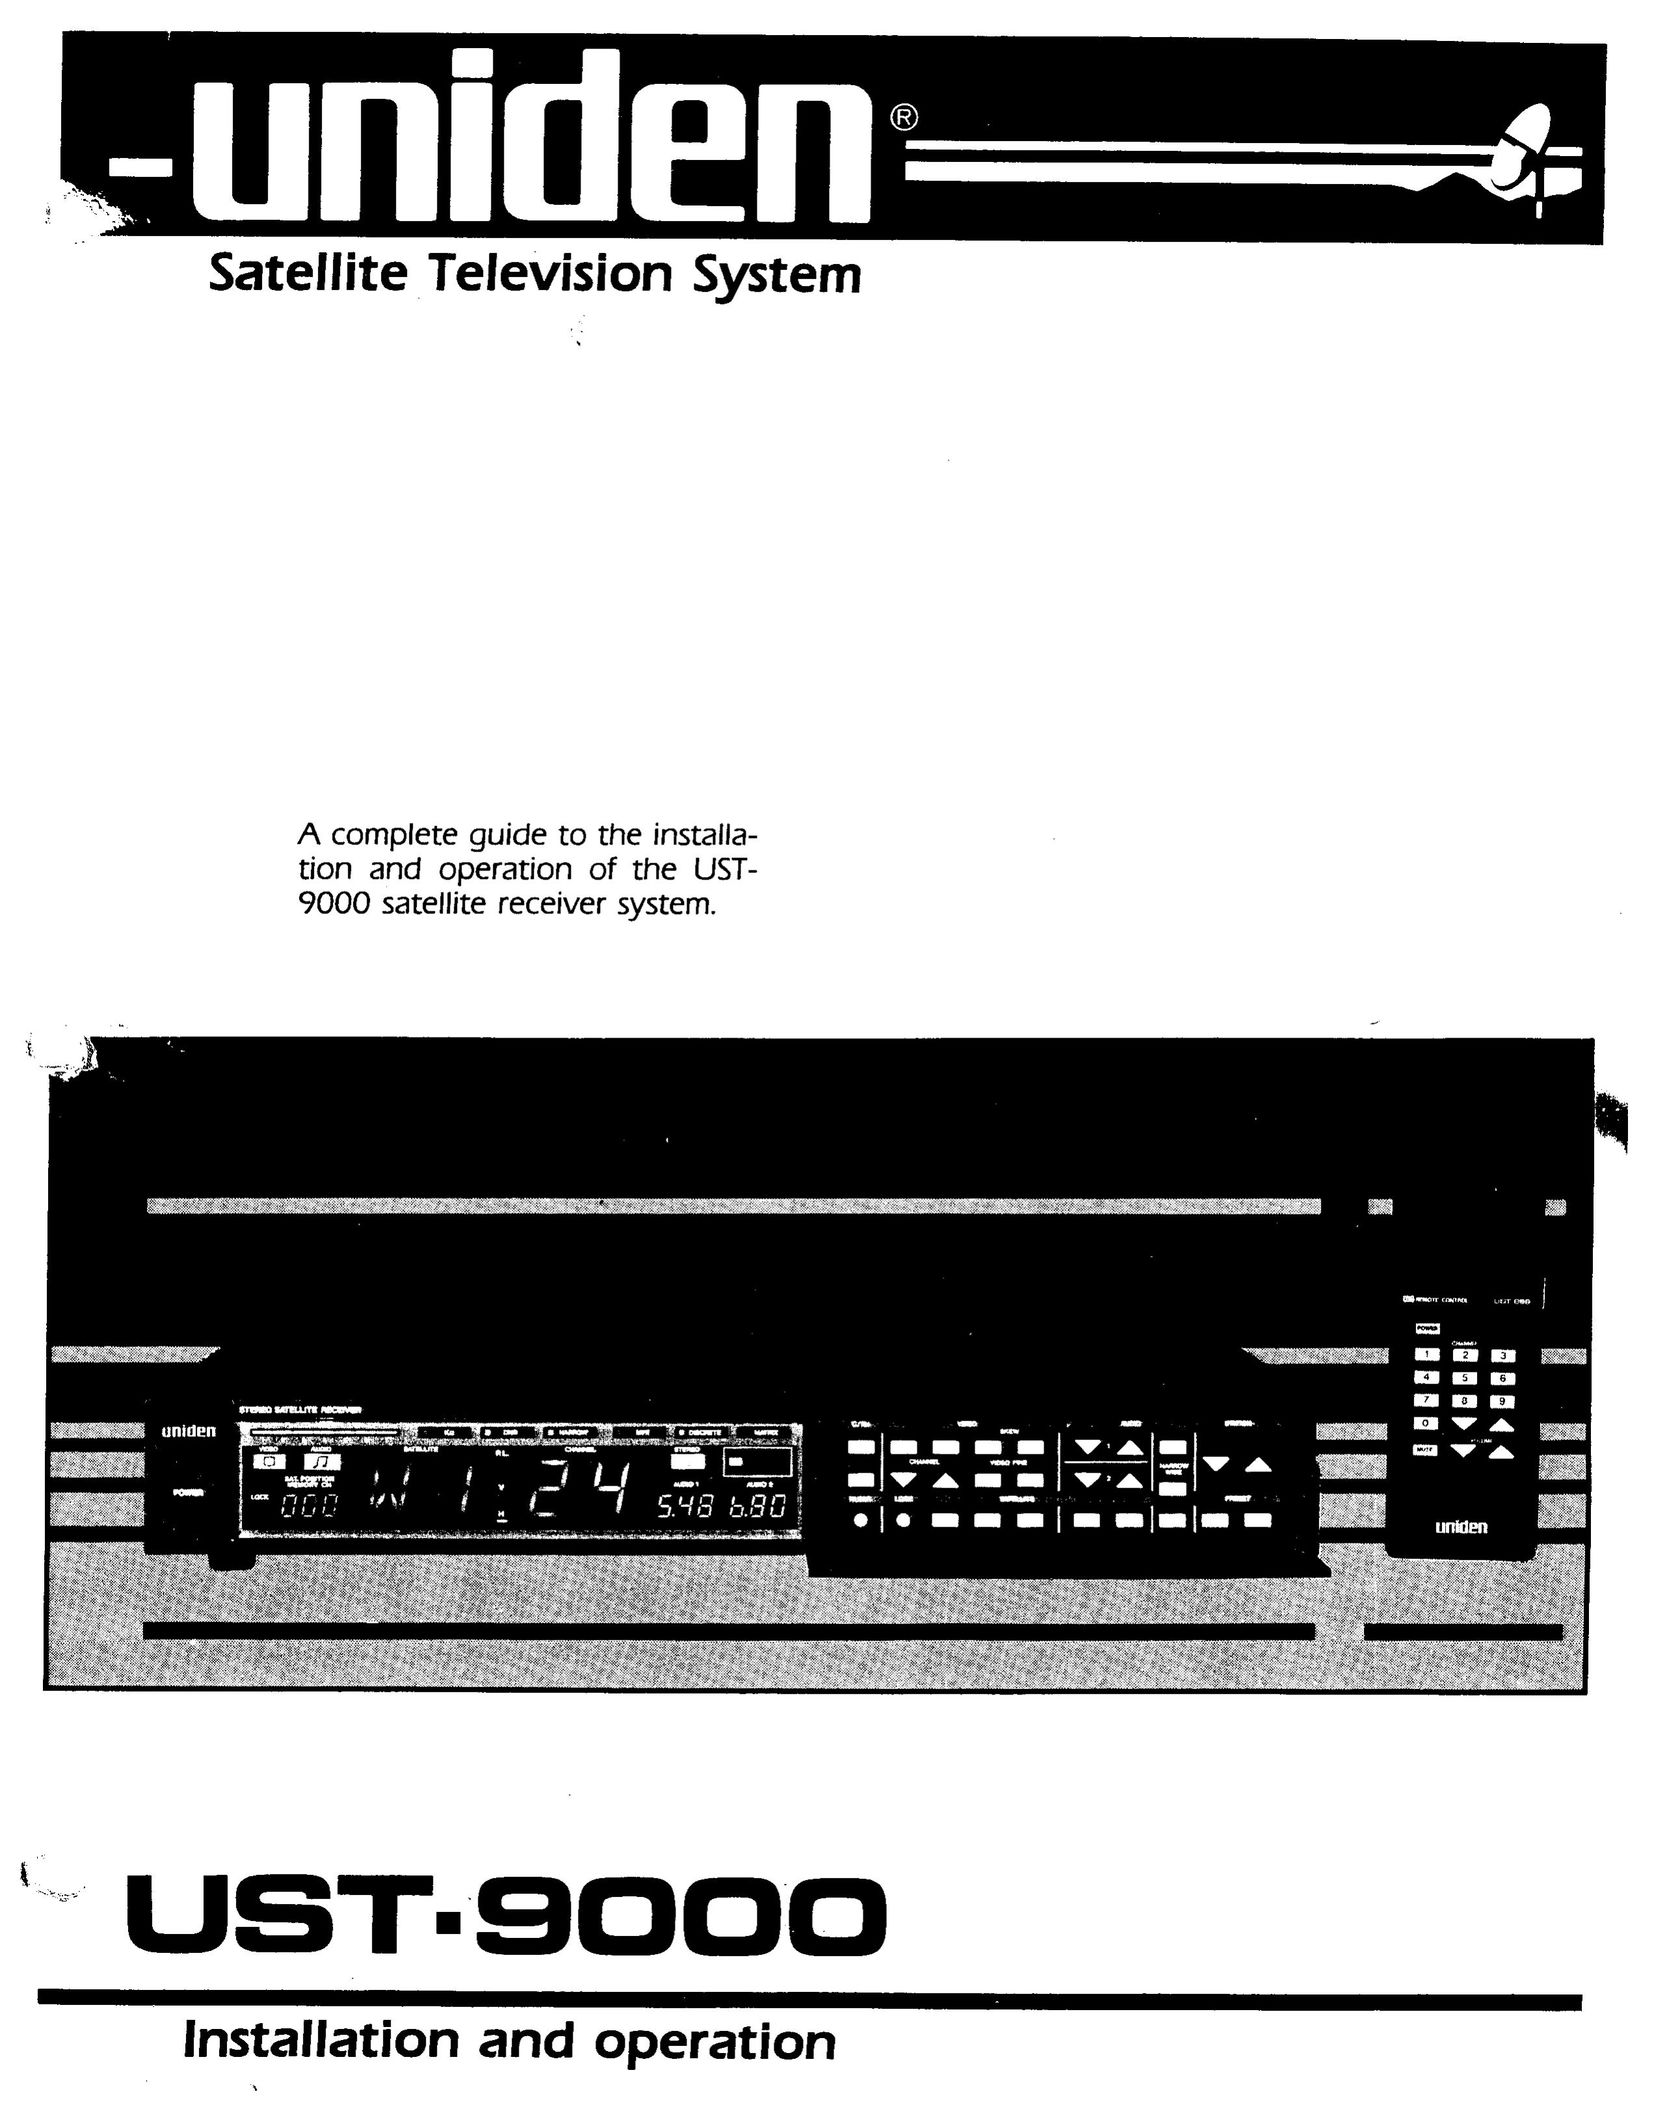 Uniden UST-9000 Satellite TV System User Manual